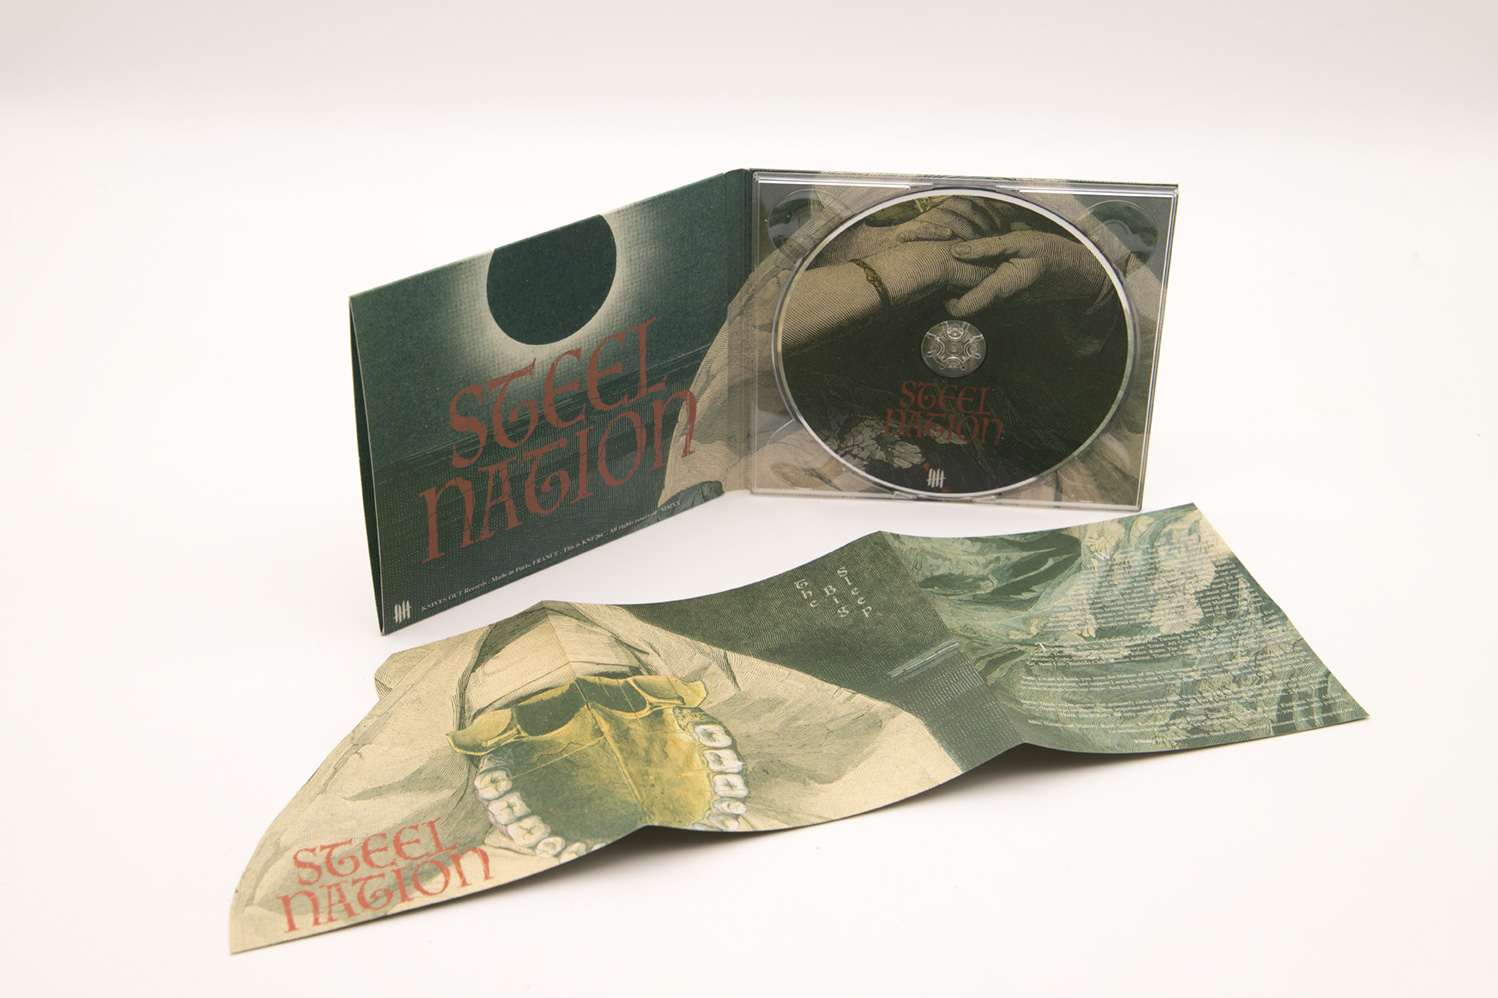 STEEL NATION "The Big Sleep" Deluxe Digipack CD